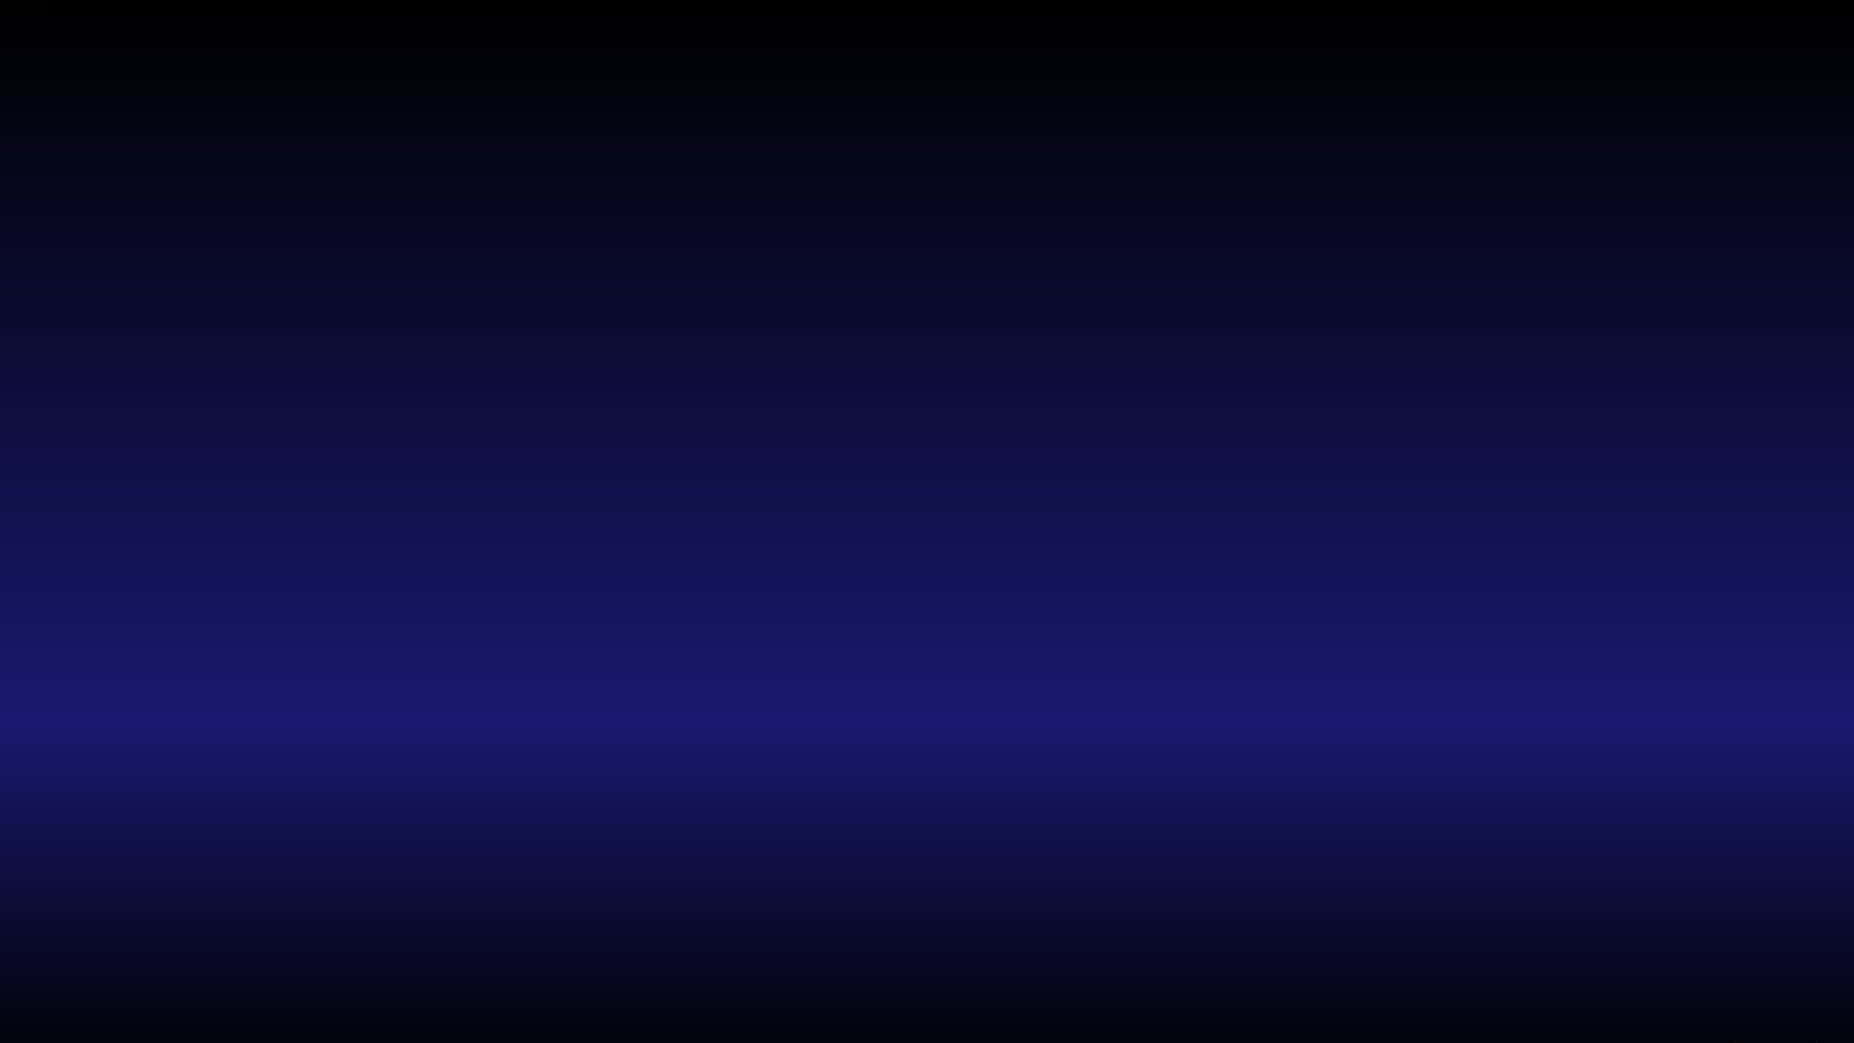 Horizon Dark Blue Ombre Wallpaper